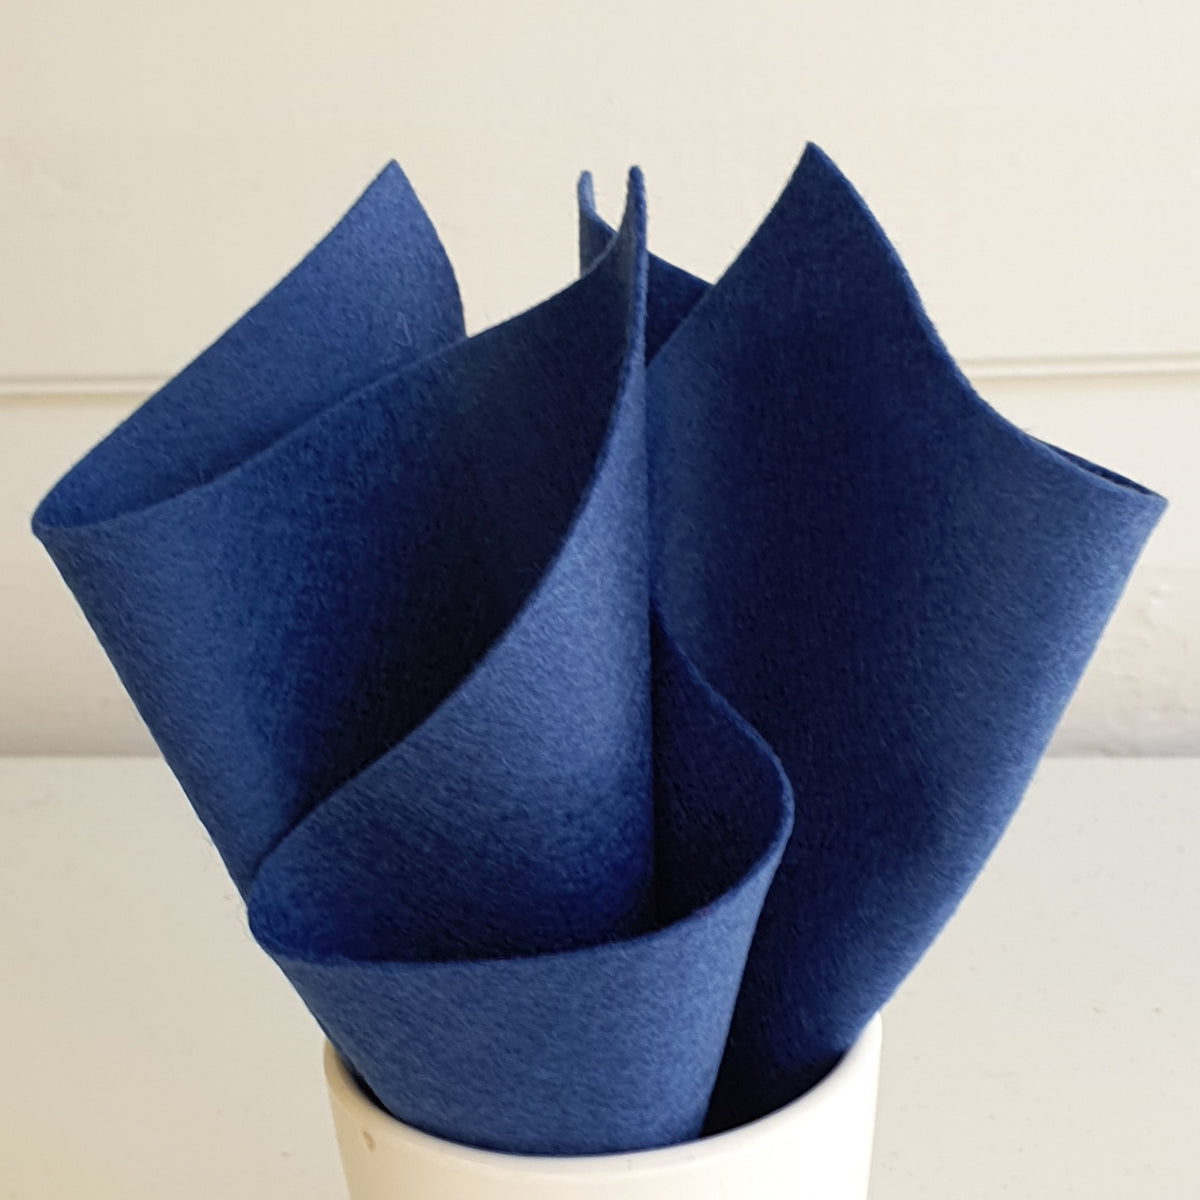 100 Percent Wool Felt Sheet in Color ROYAL BLUE - 18 X 18 Wool Felt Sheet  - Merino Wool Felt